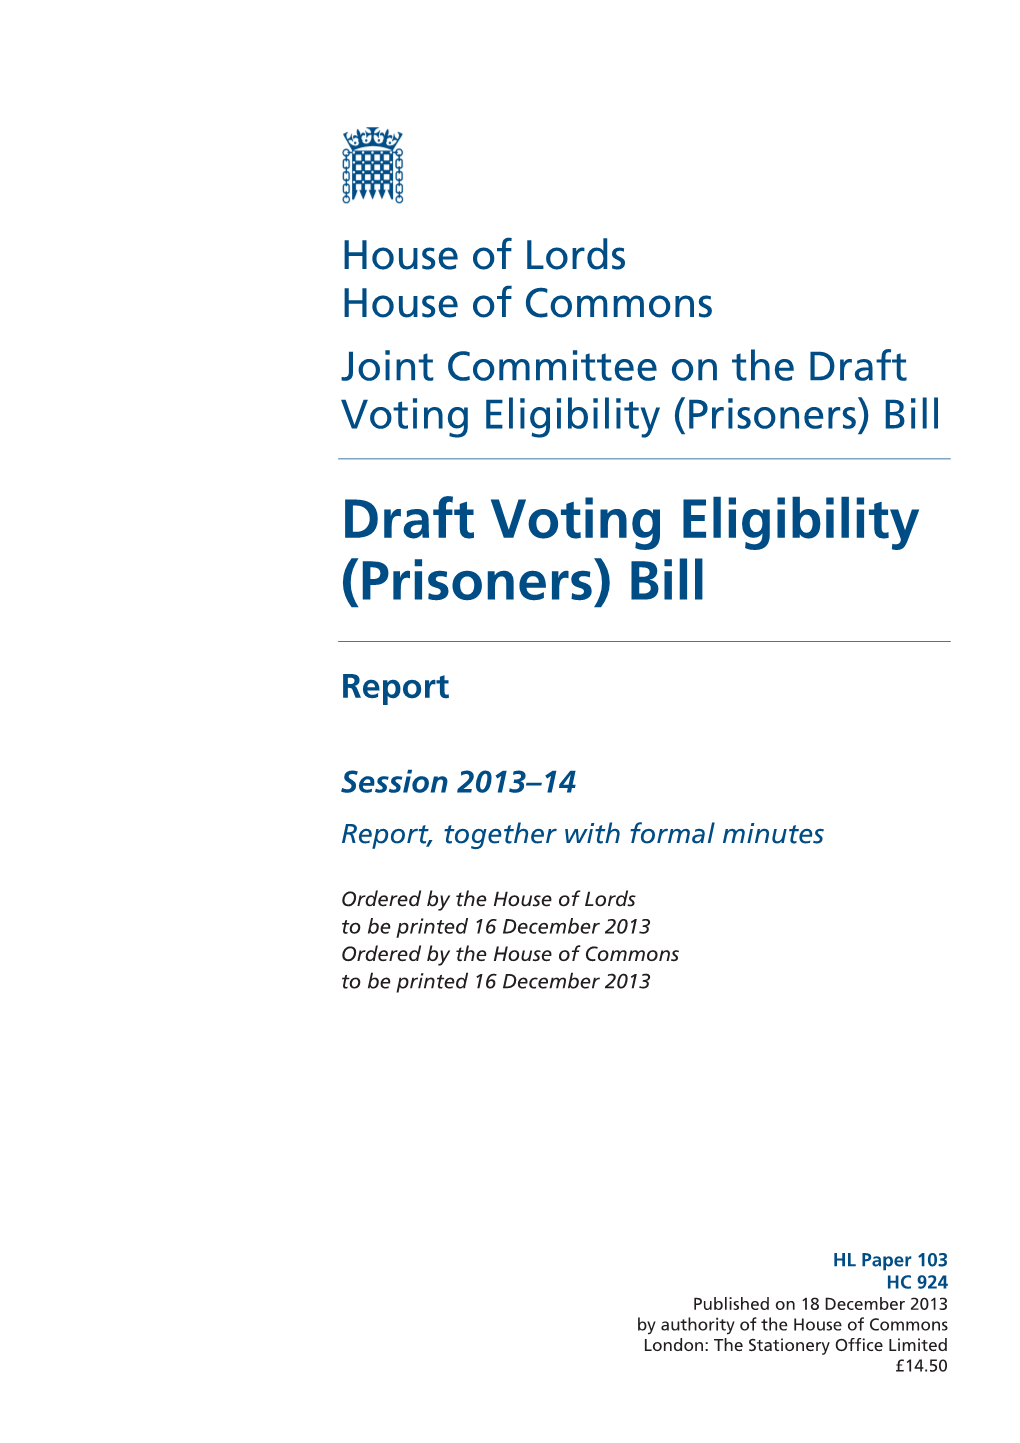 Draft Voting Eligibility (Prisoners) Bill